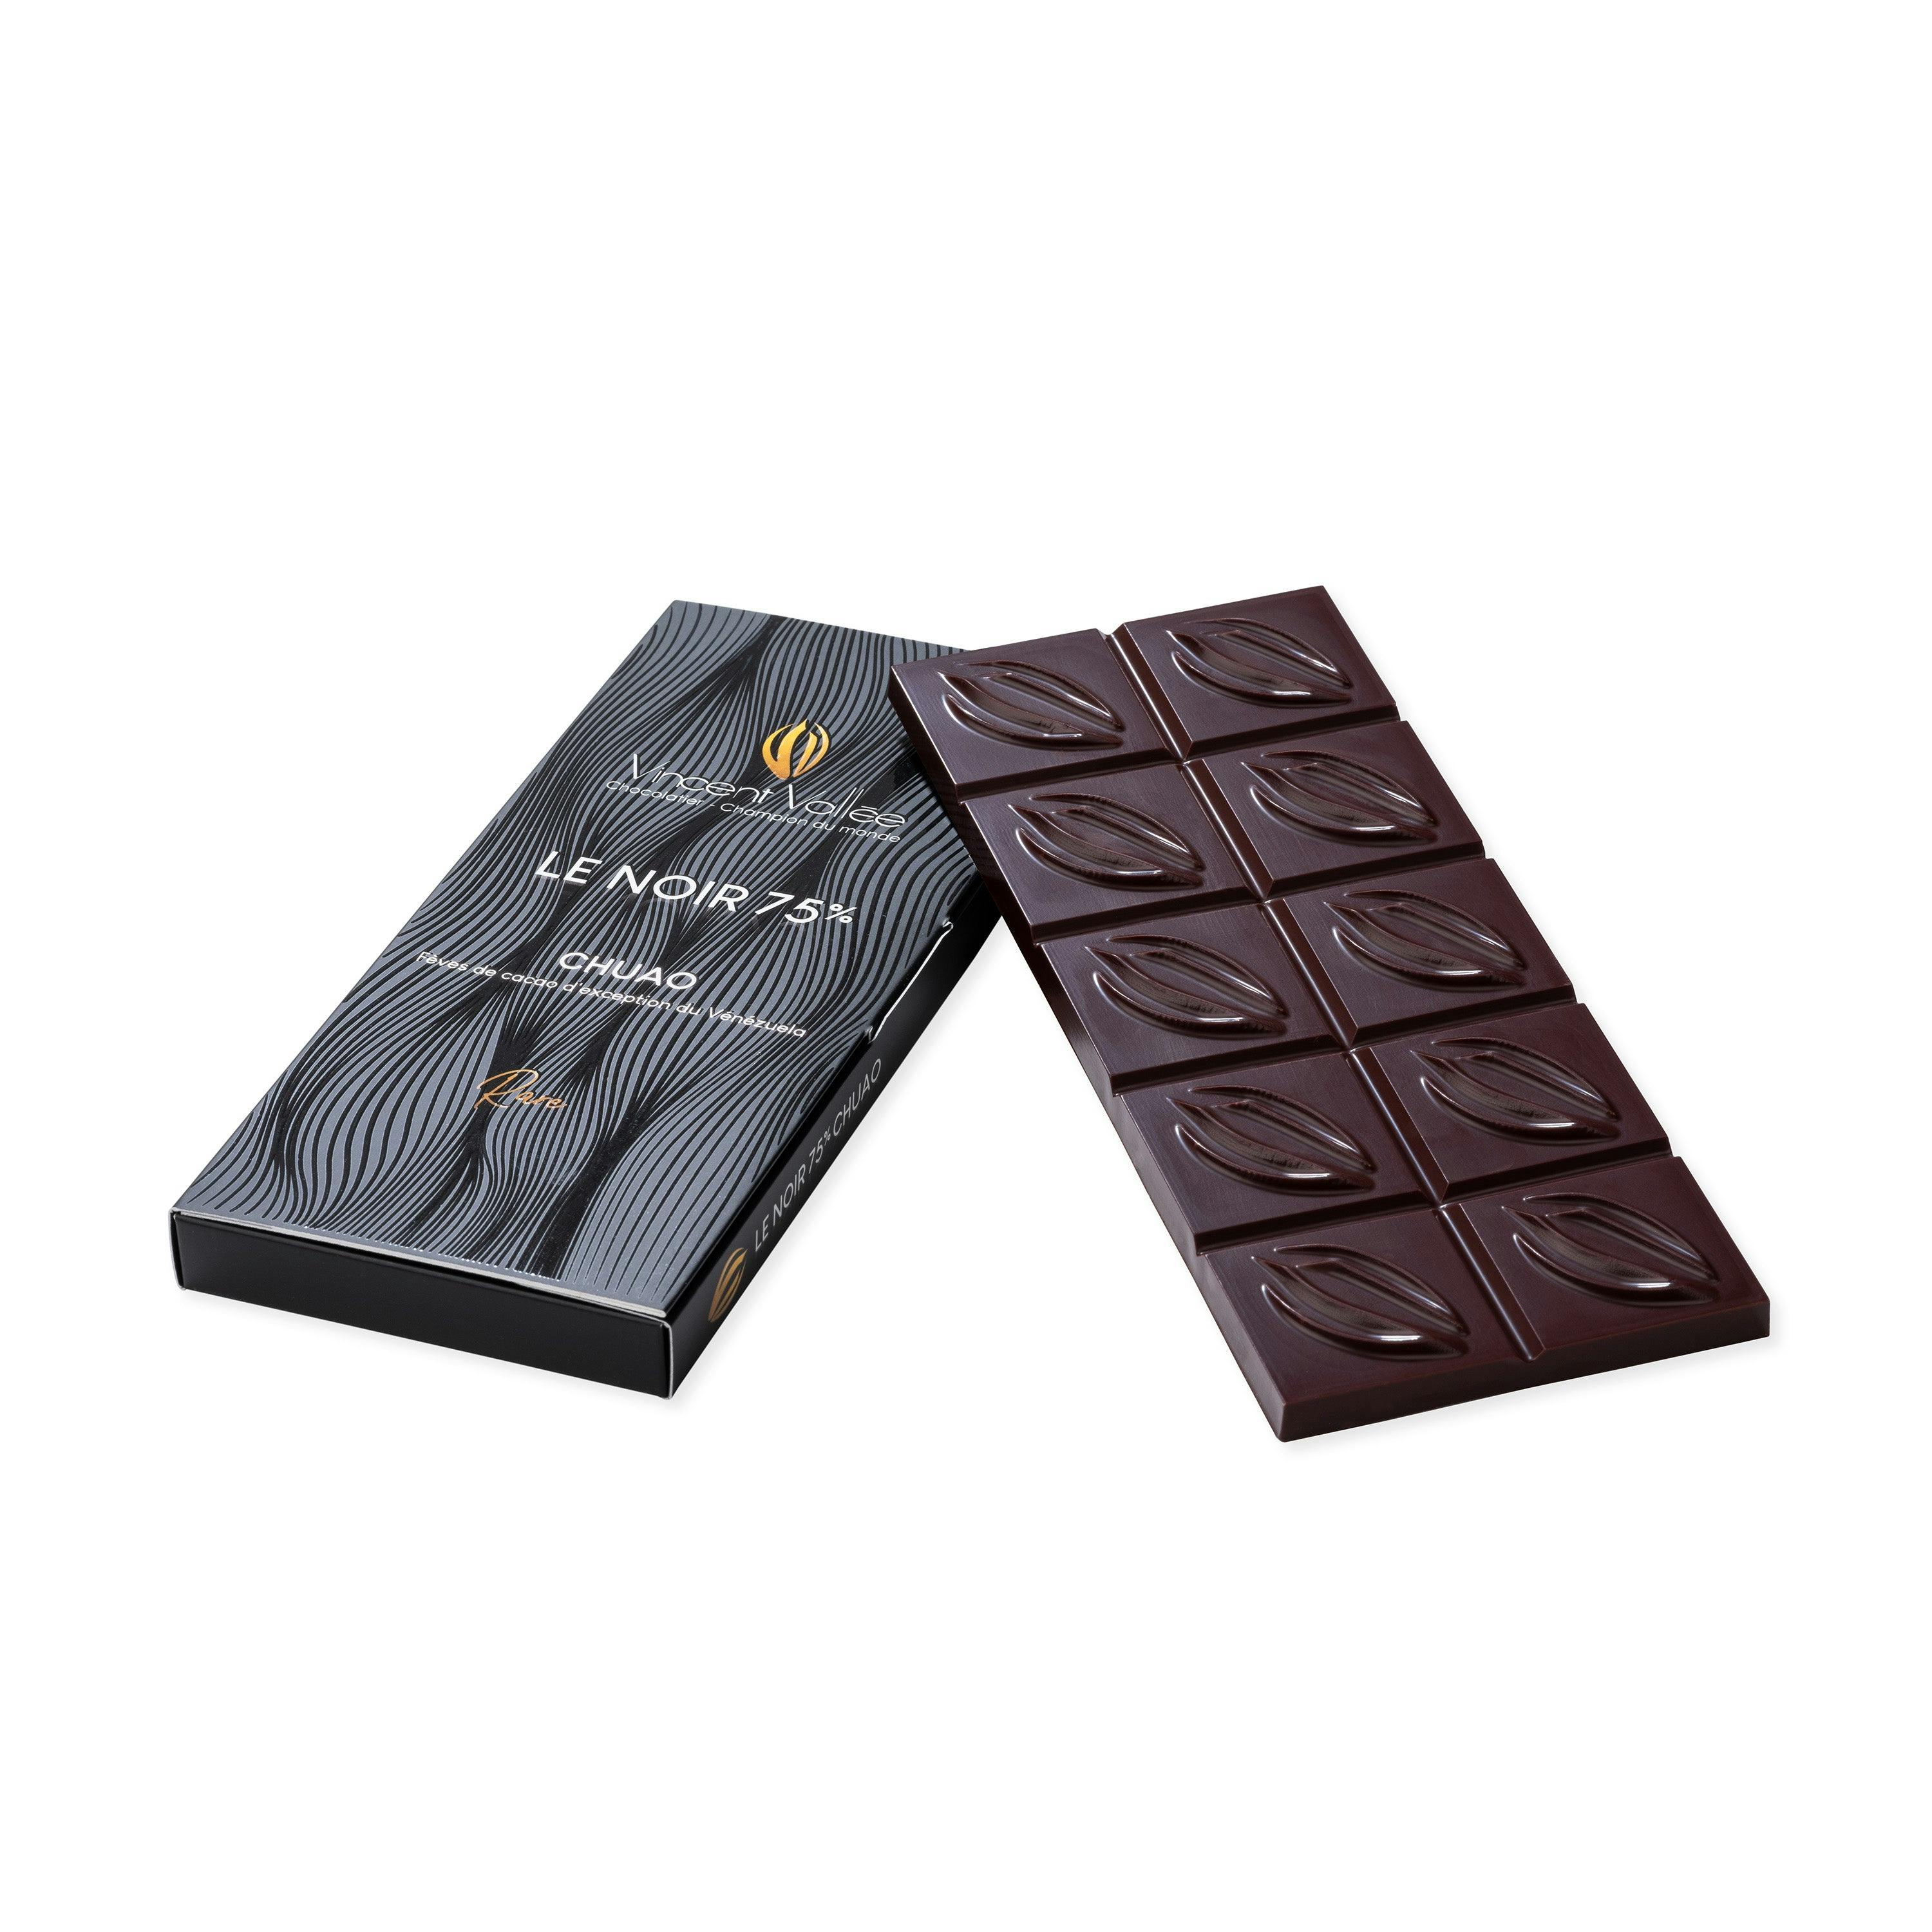 Chuao 75% - Vincent Vallée chocolatier champion du monde